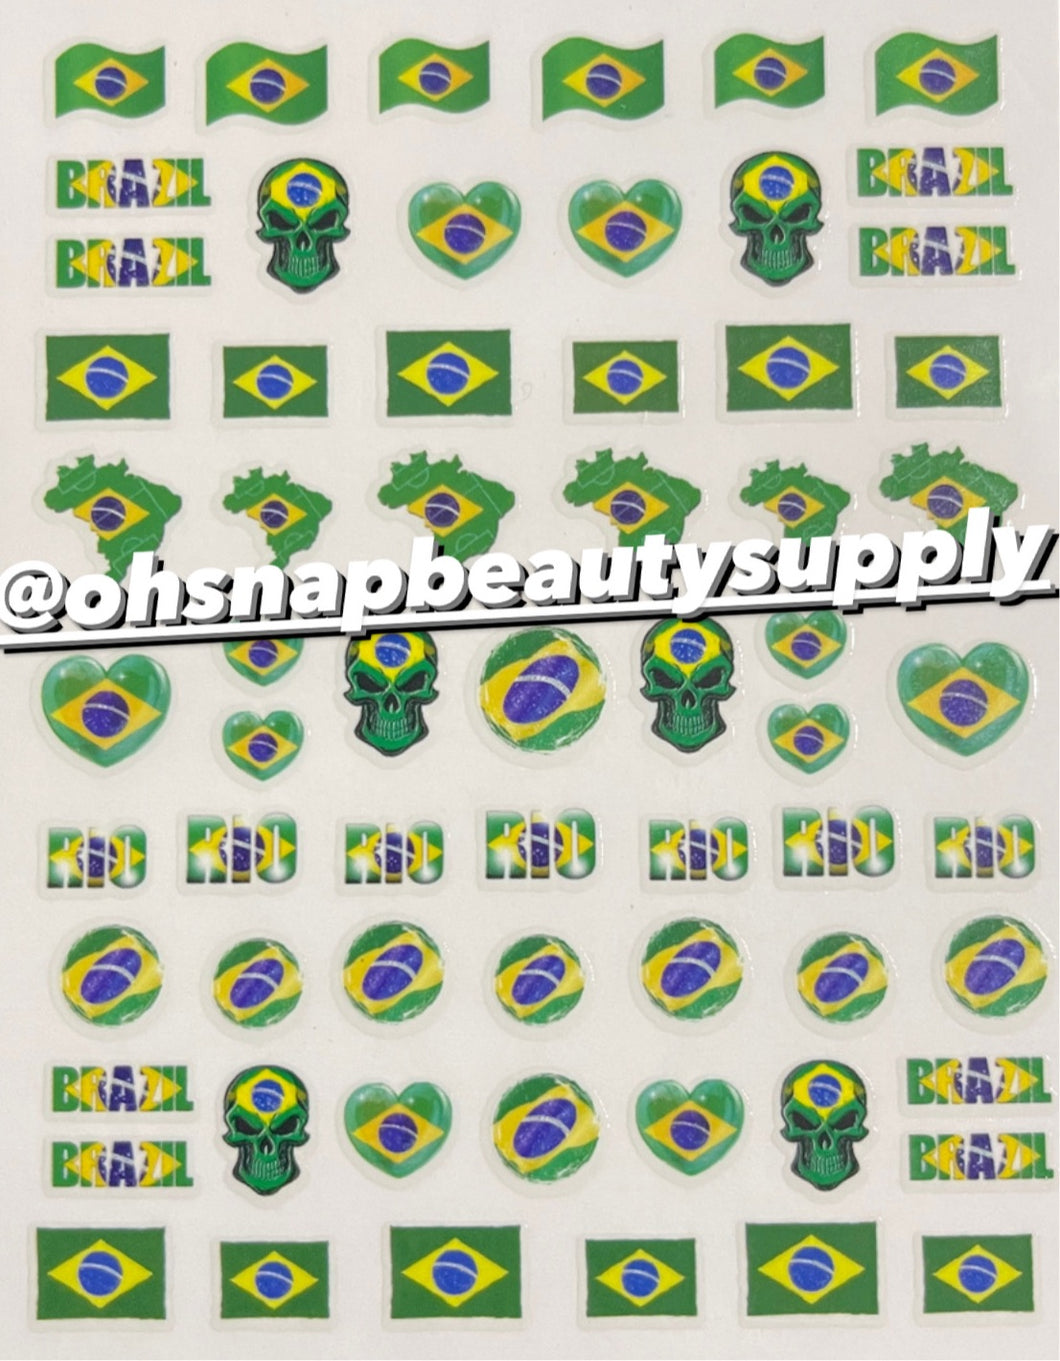 * COUNTRY 1194 BRAZIL Sticker